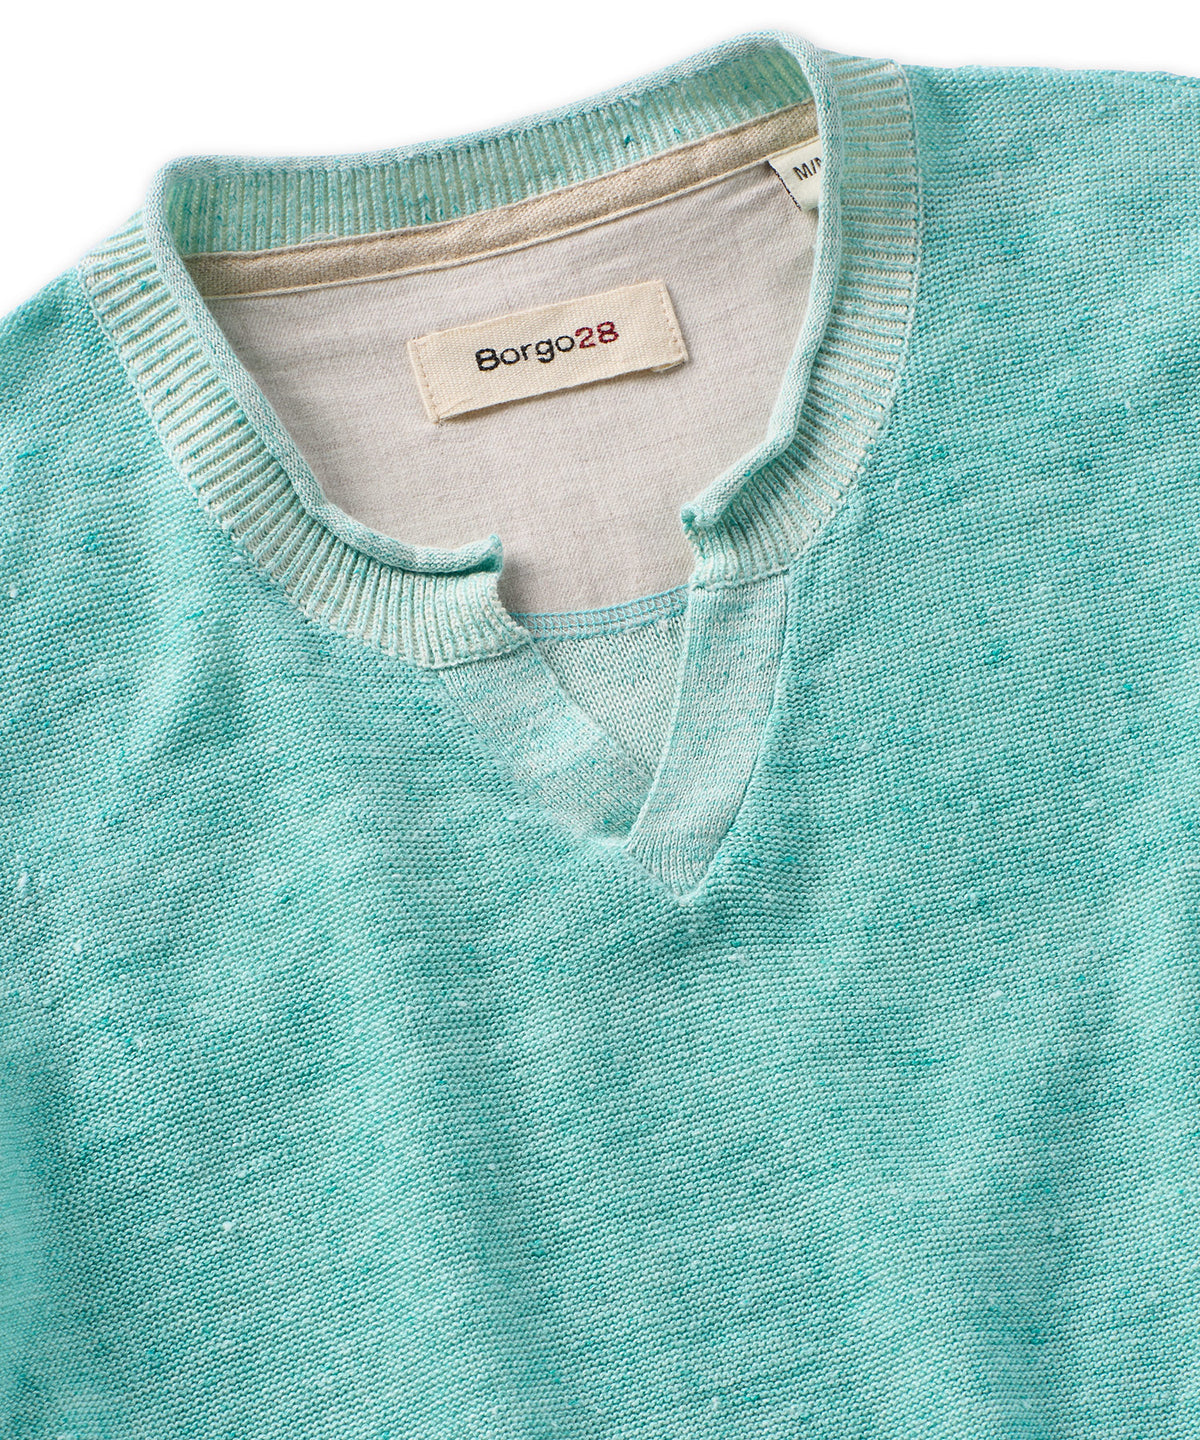 Cotton-Linen Notch Neck Sweater